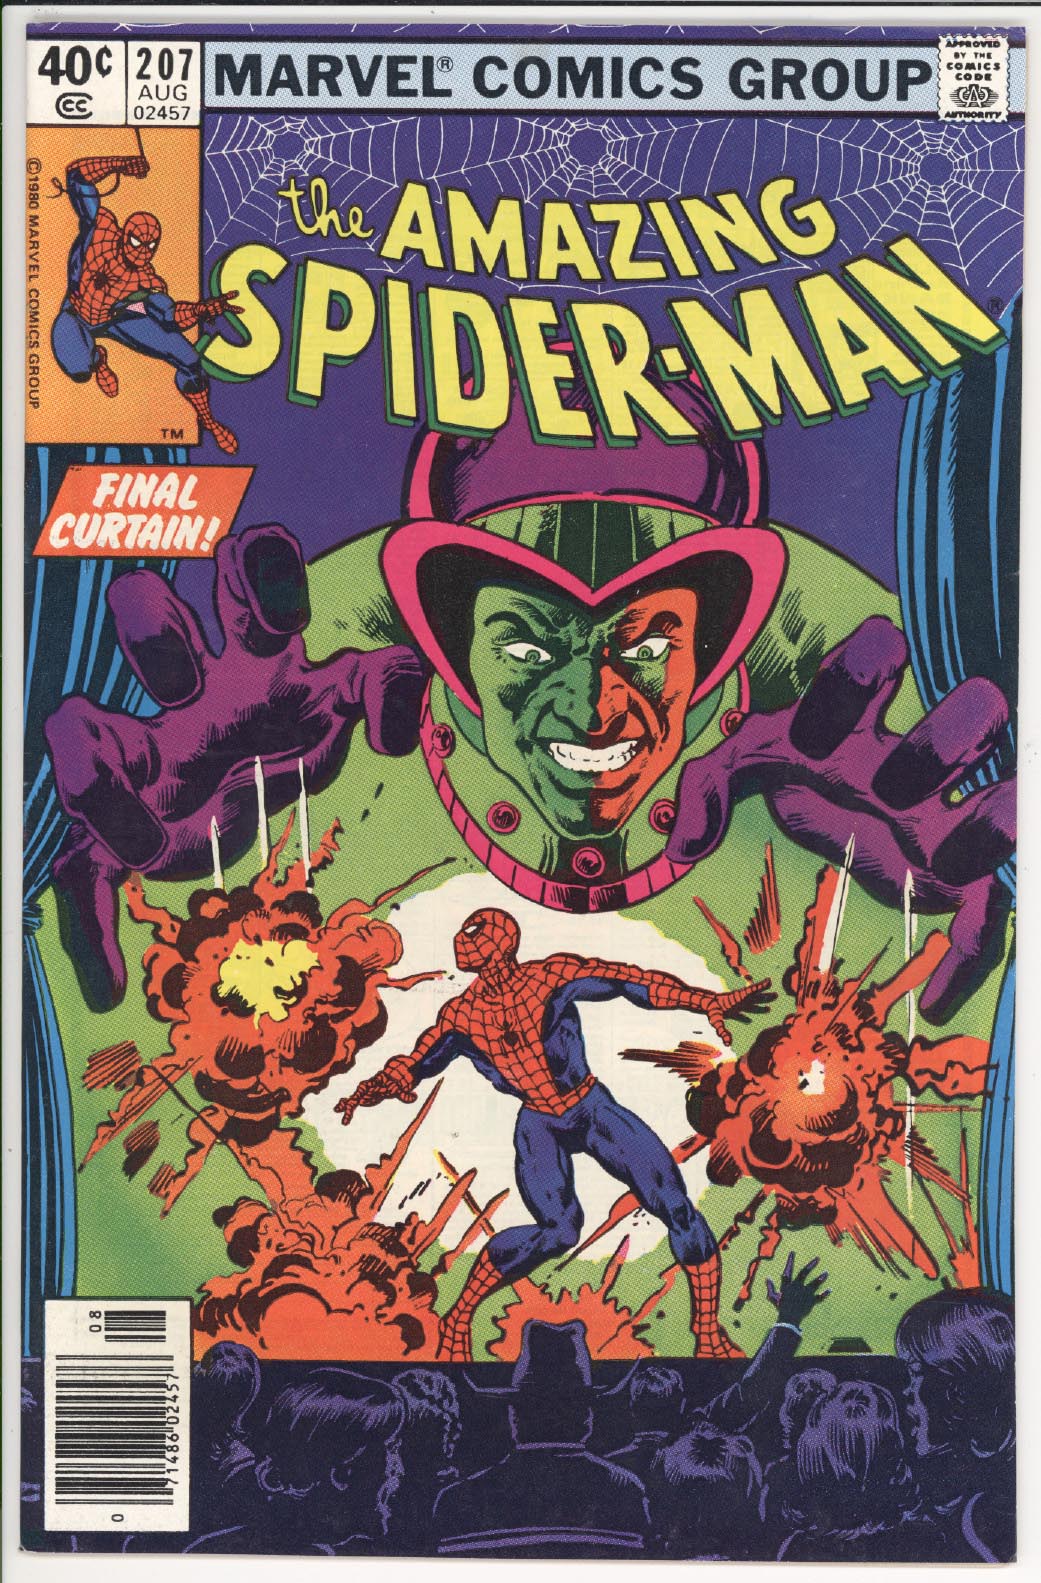 Amazing Spider-Man #207 front